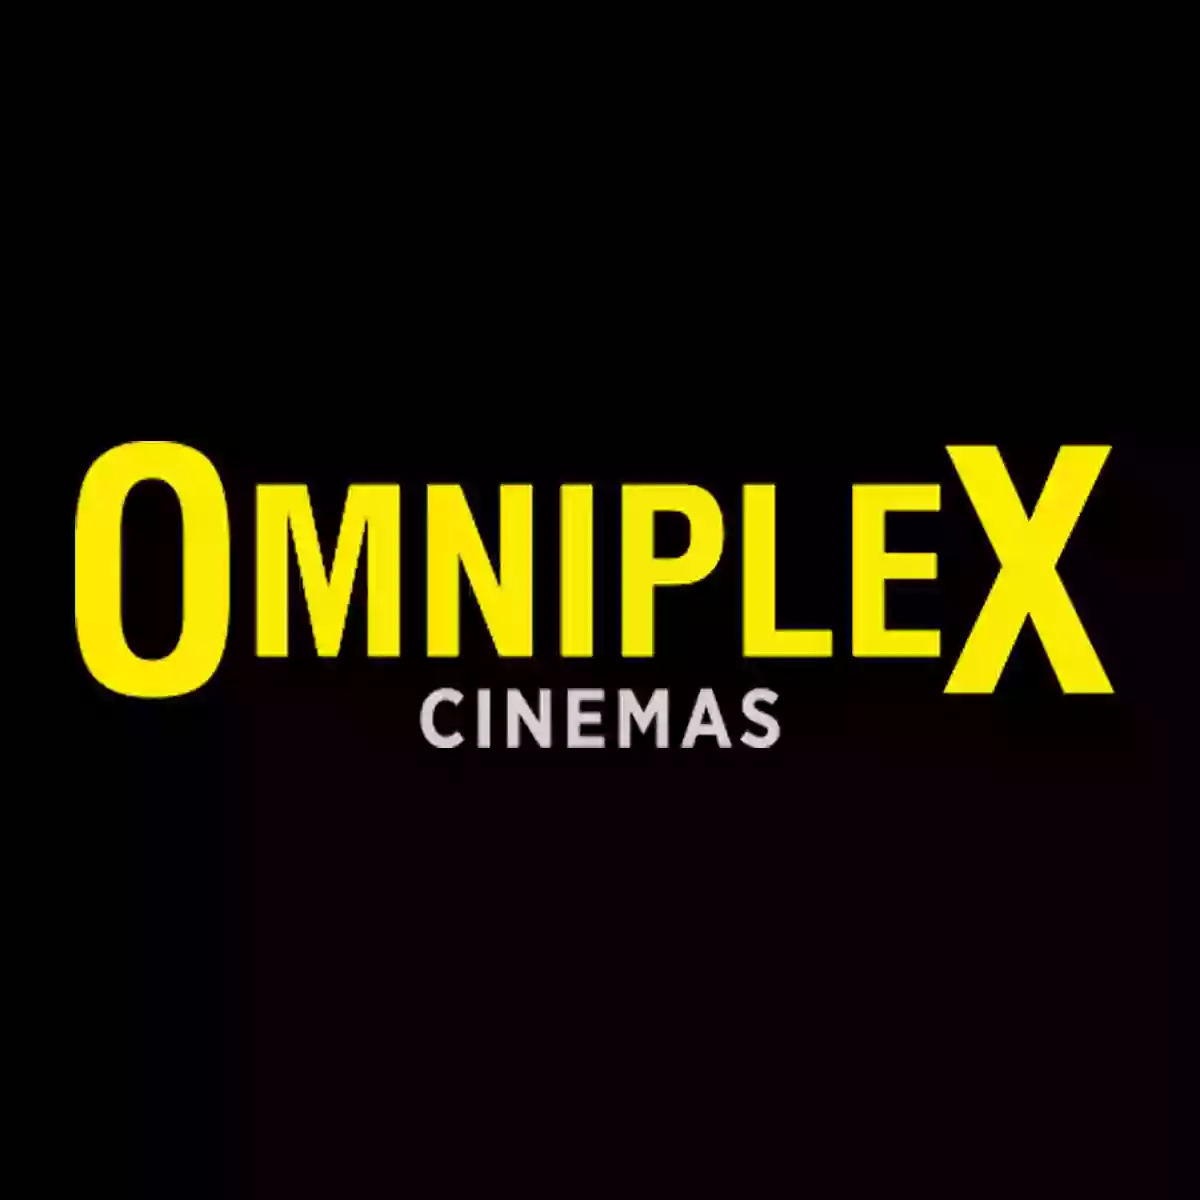 Omniplex Cinema Longford